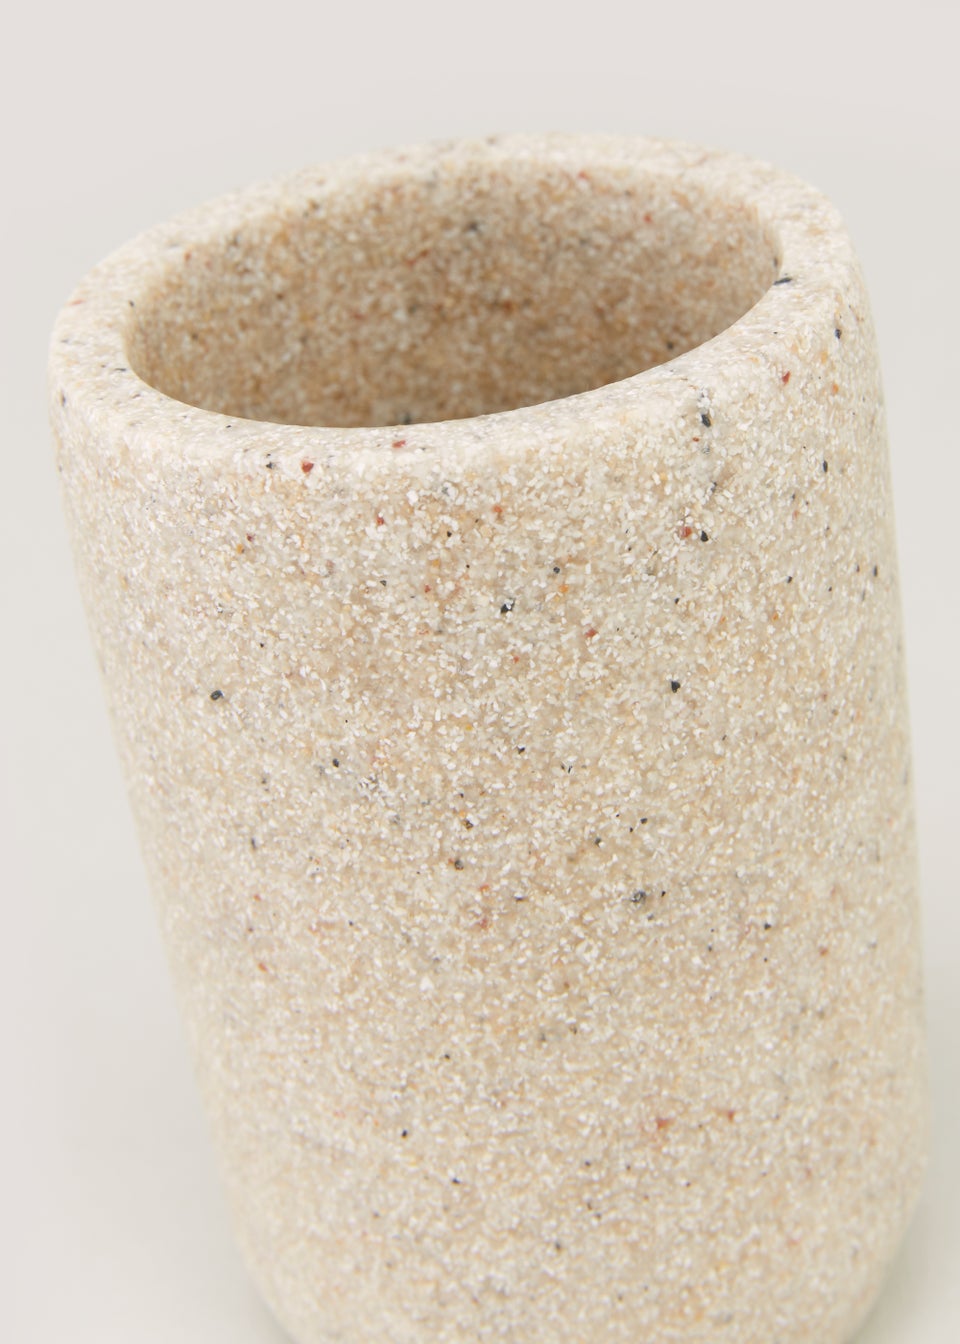 Beige Sandstone Effect Tumbler (11cm x 9.5cm x 9.5cm)